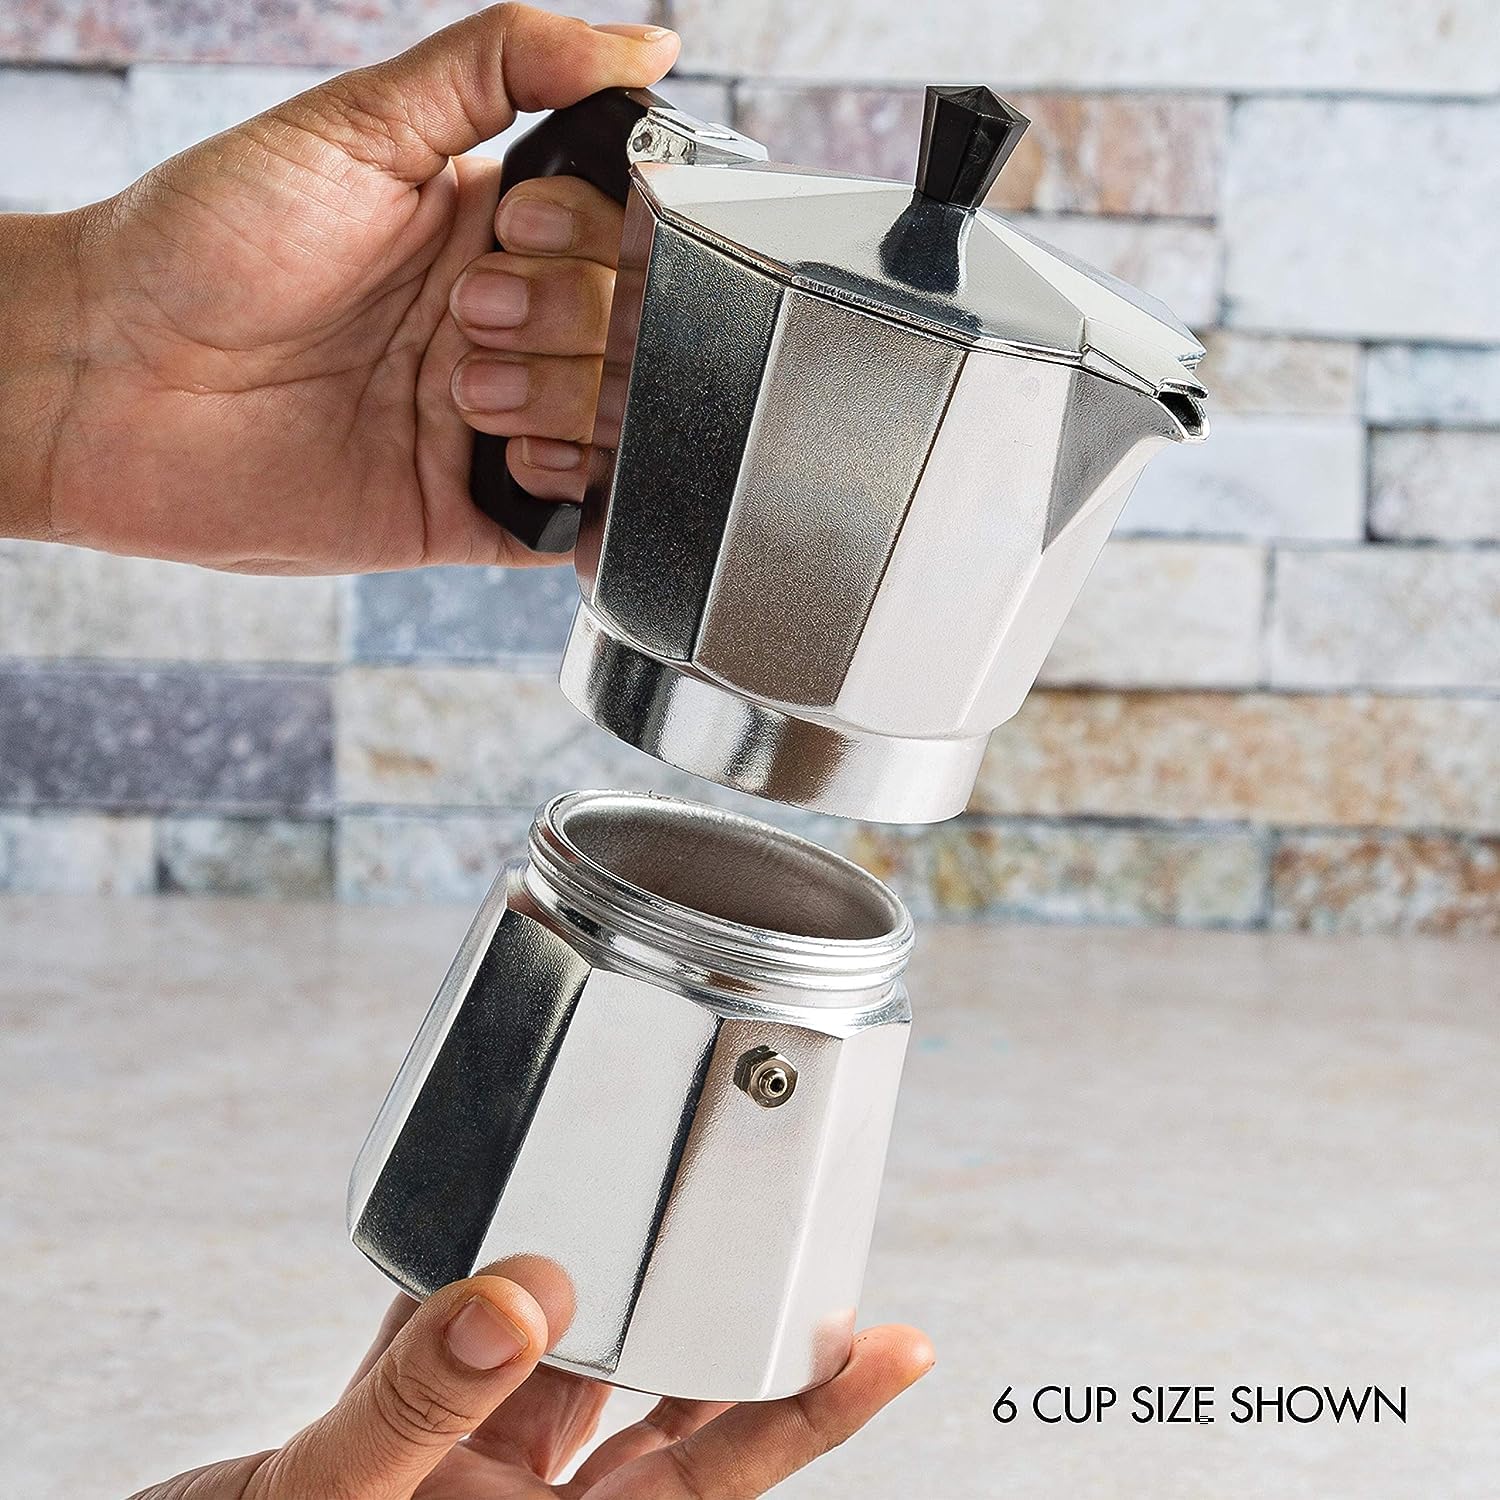 SwindowL Moka Pot Coffee Pots And Stovetop Espresso Maker,Italian Coffee Maker,Greca Coffee Maker, Cafeteras,100ml, Silver (2 Cup)